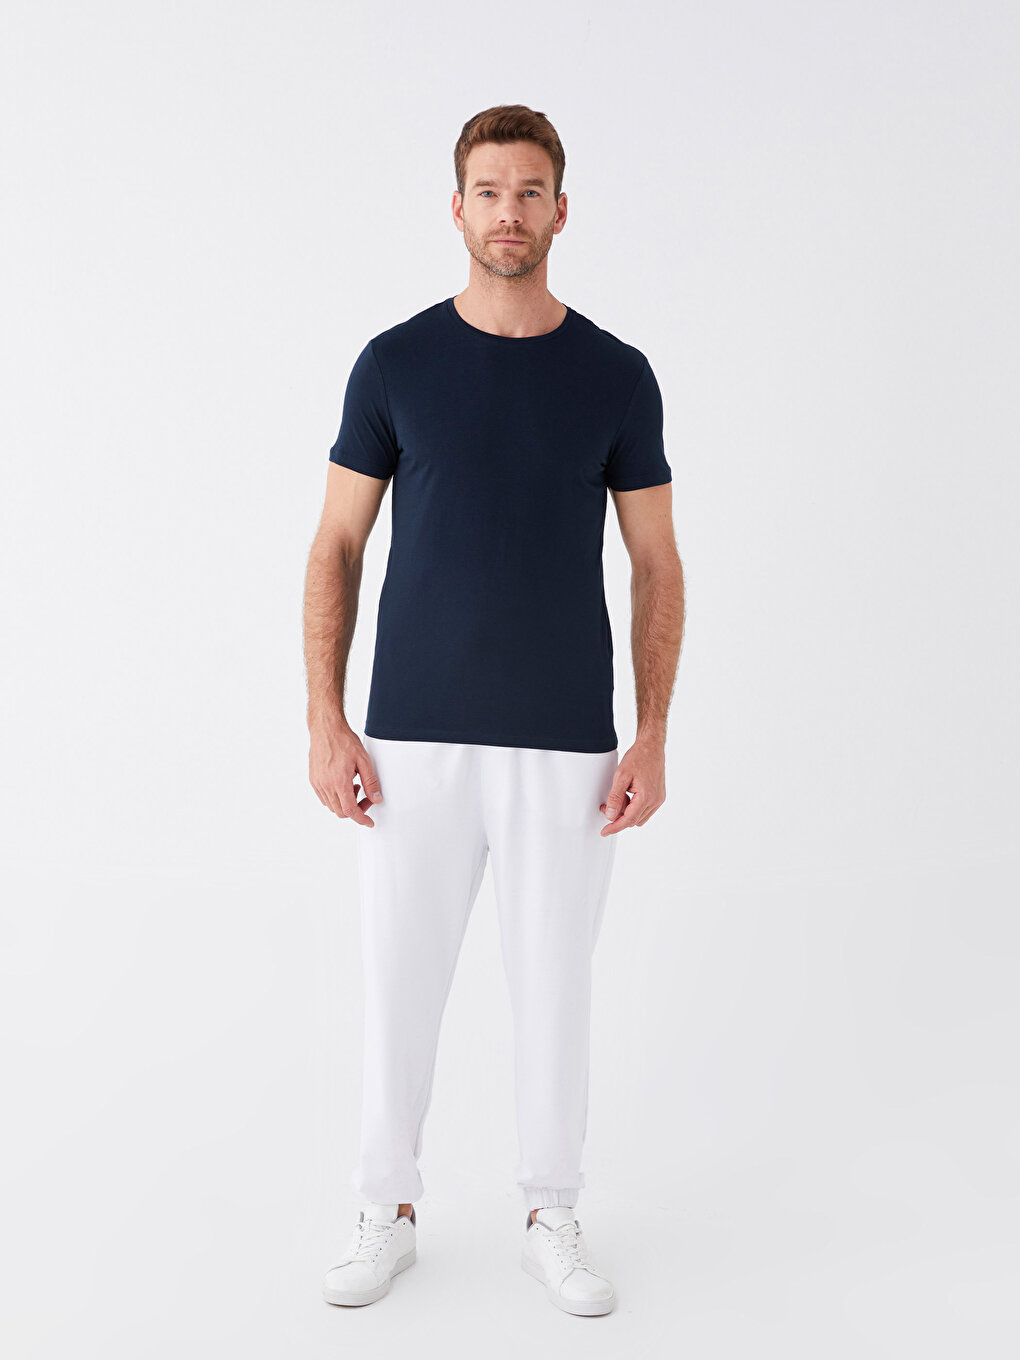 Crew Neck Short Sleeve Combed Cotton Men's T-shirt -S41096Z8-KN7 